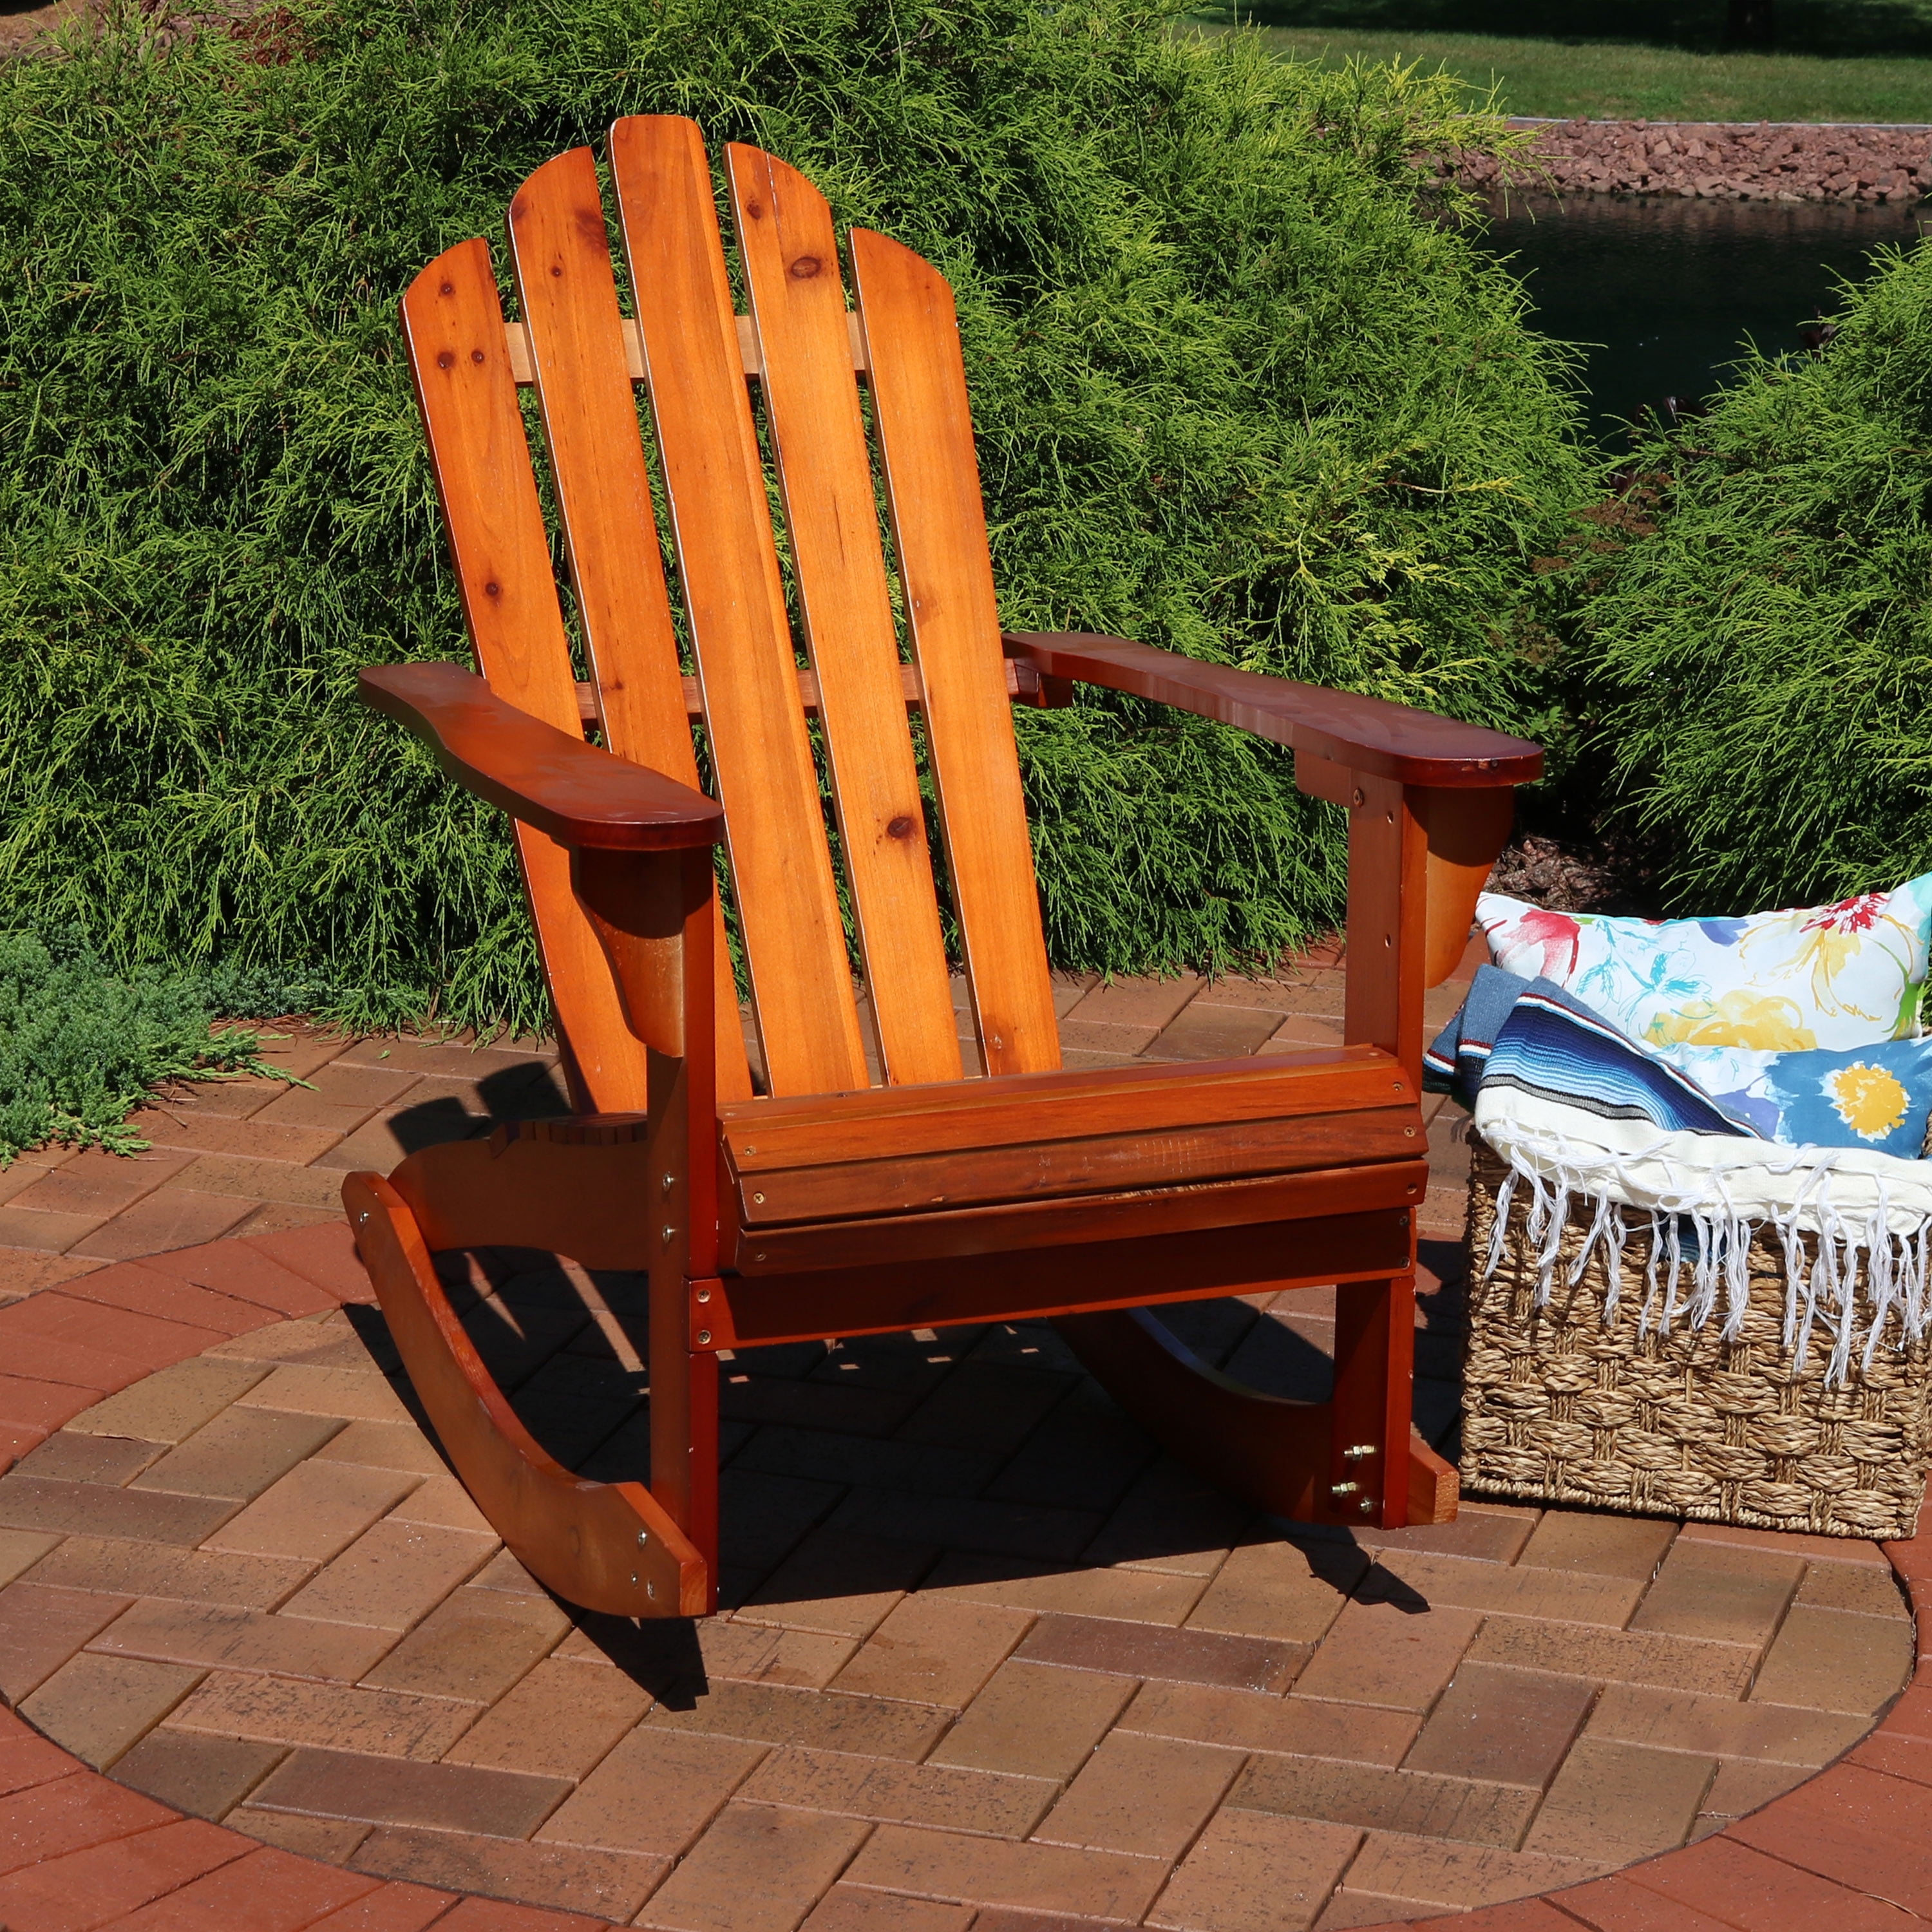 Sunnydaze Wood Adirondack Rocking Chair, Outdoor Patio Rocker, Brown -
Walmart.com